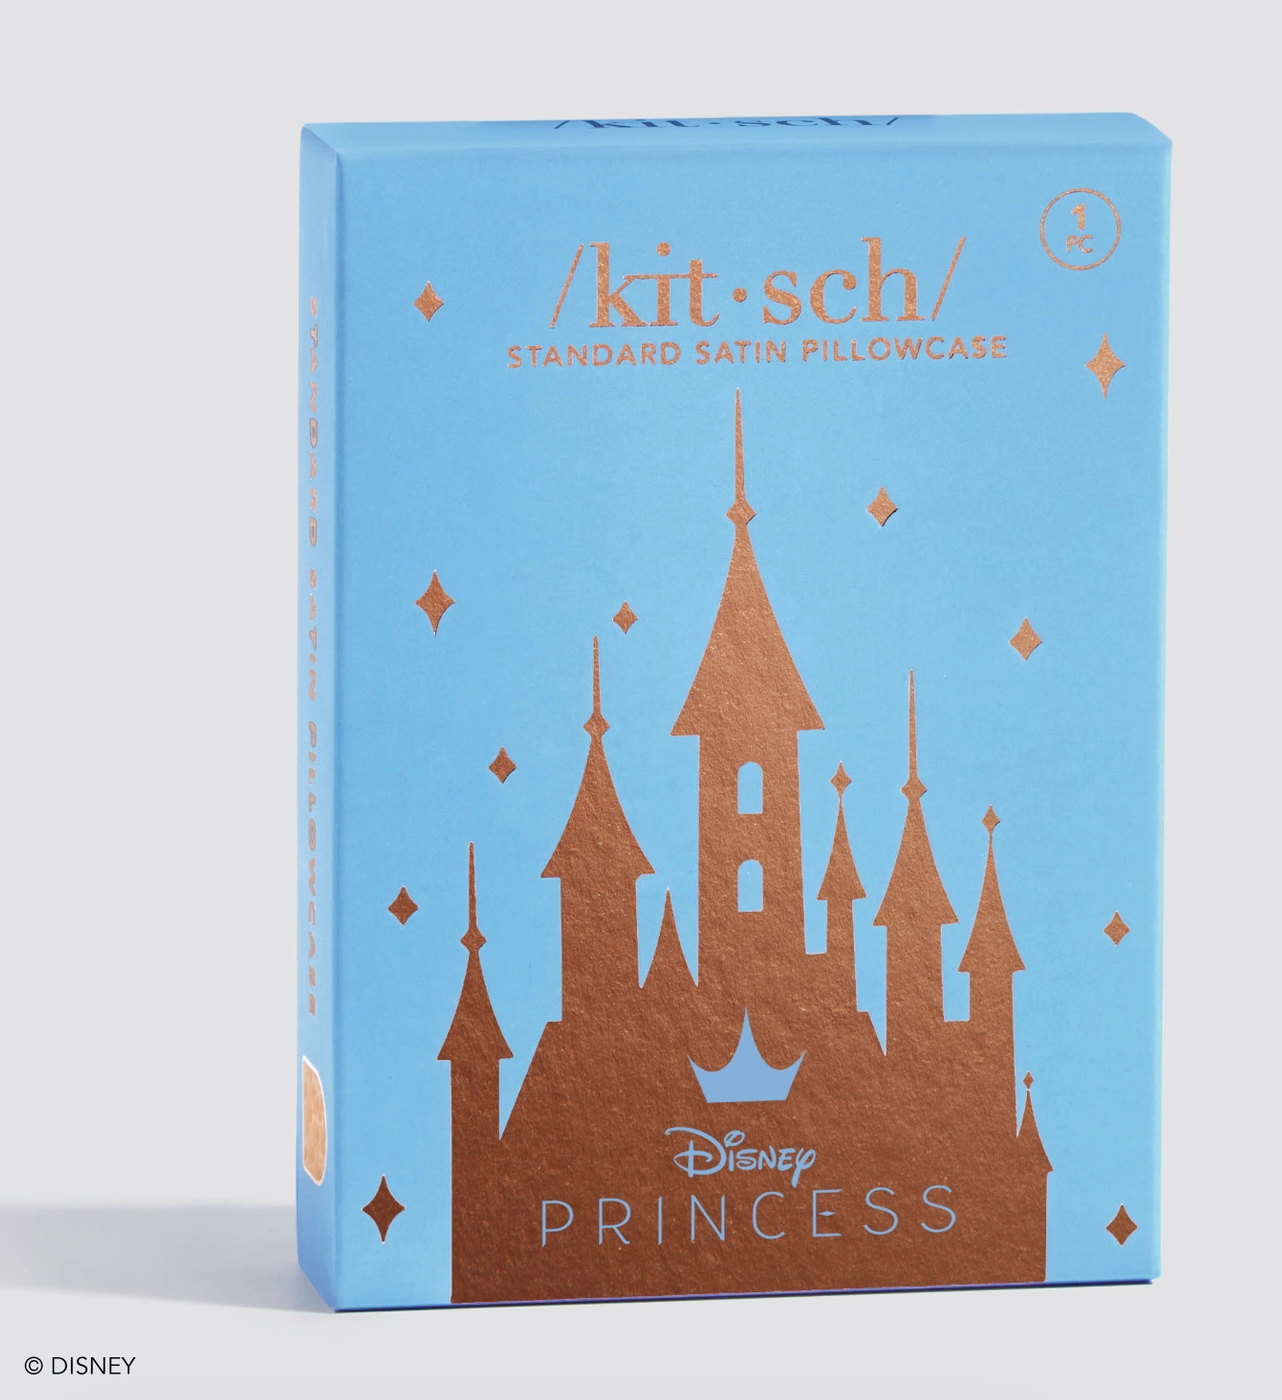 Disney Princess X Kitsch Satin Pillowcase